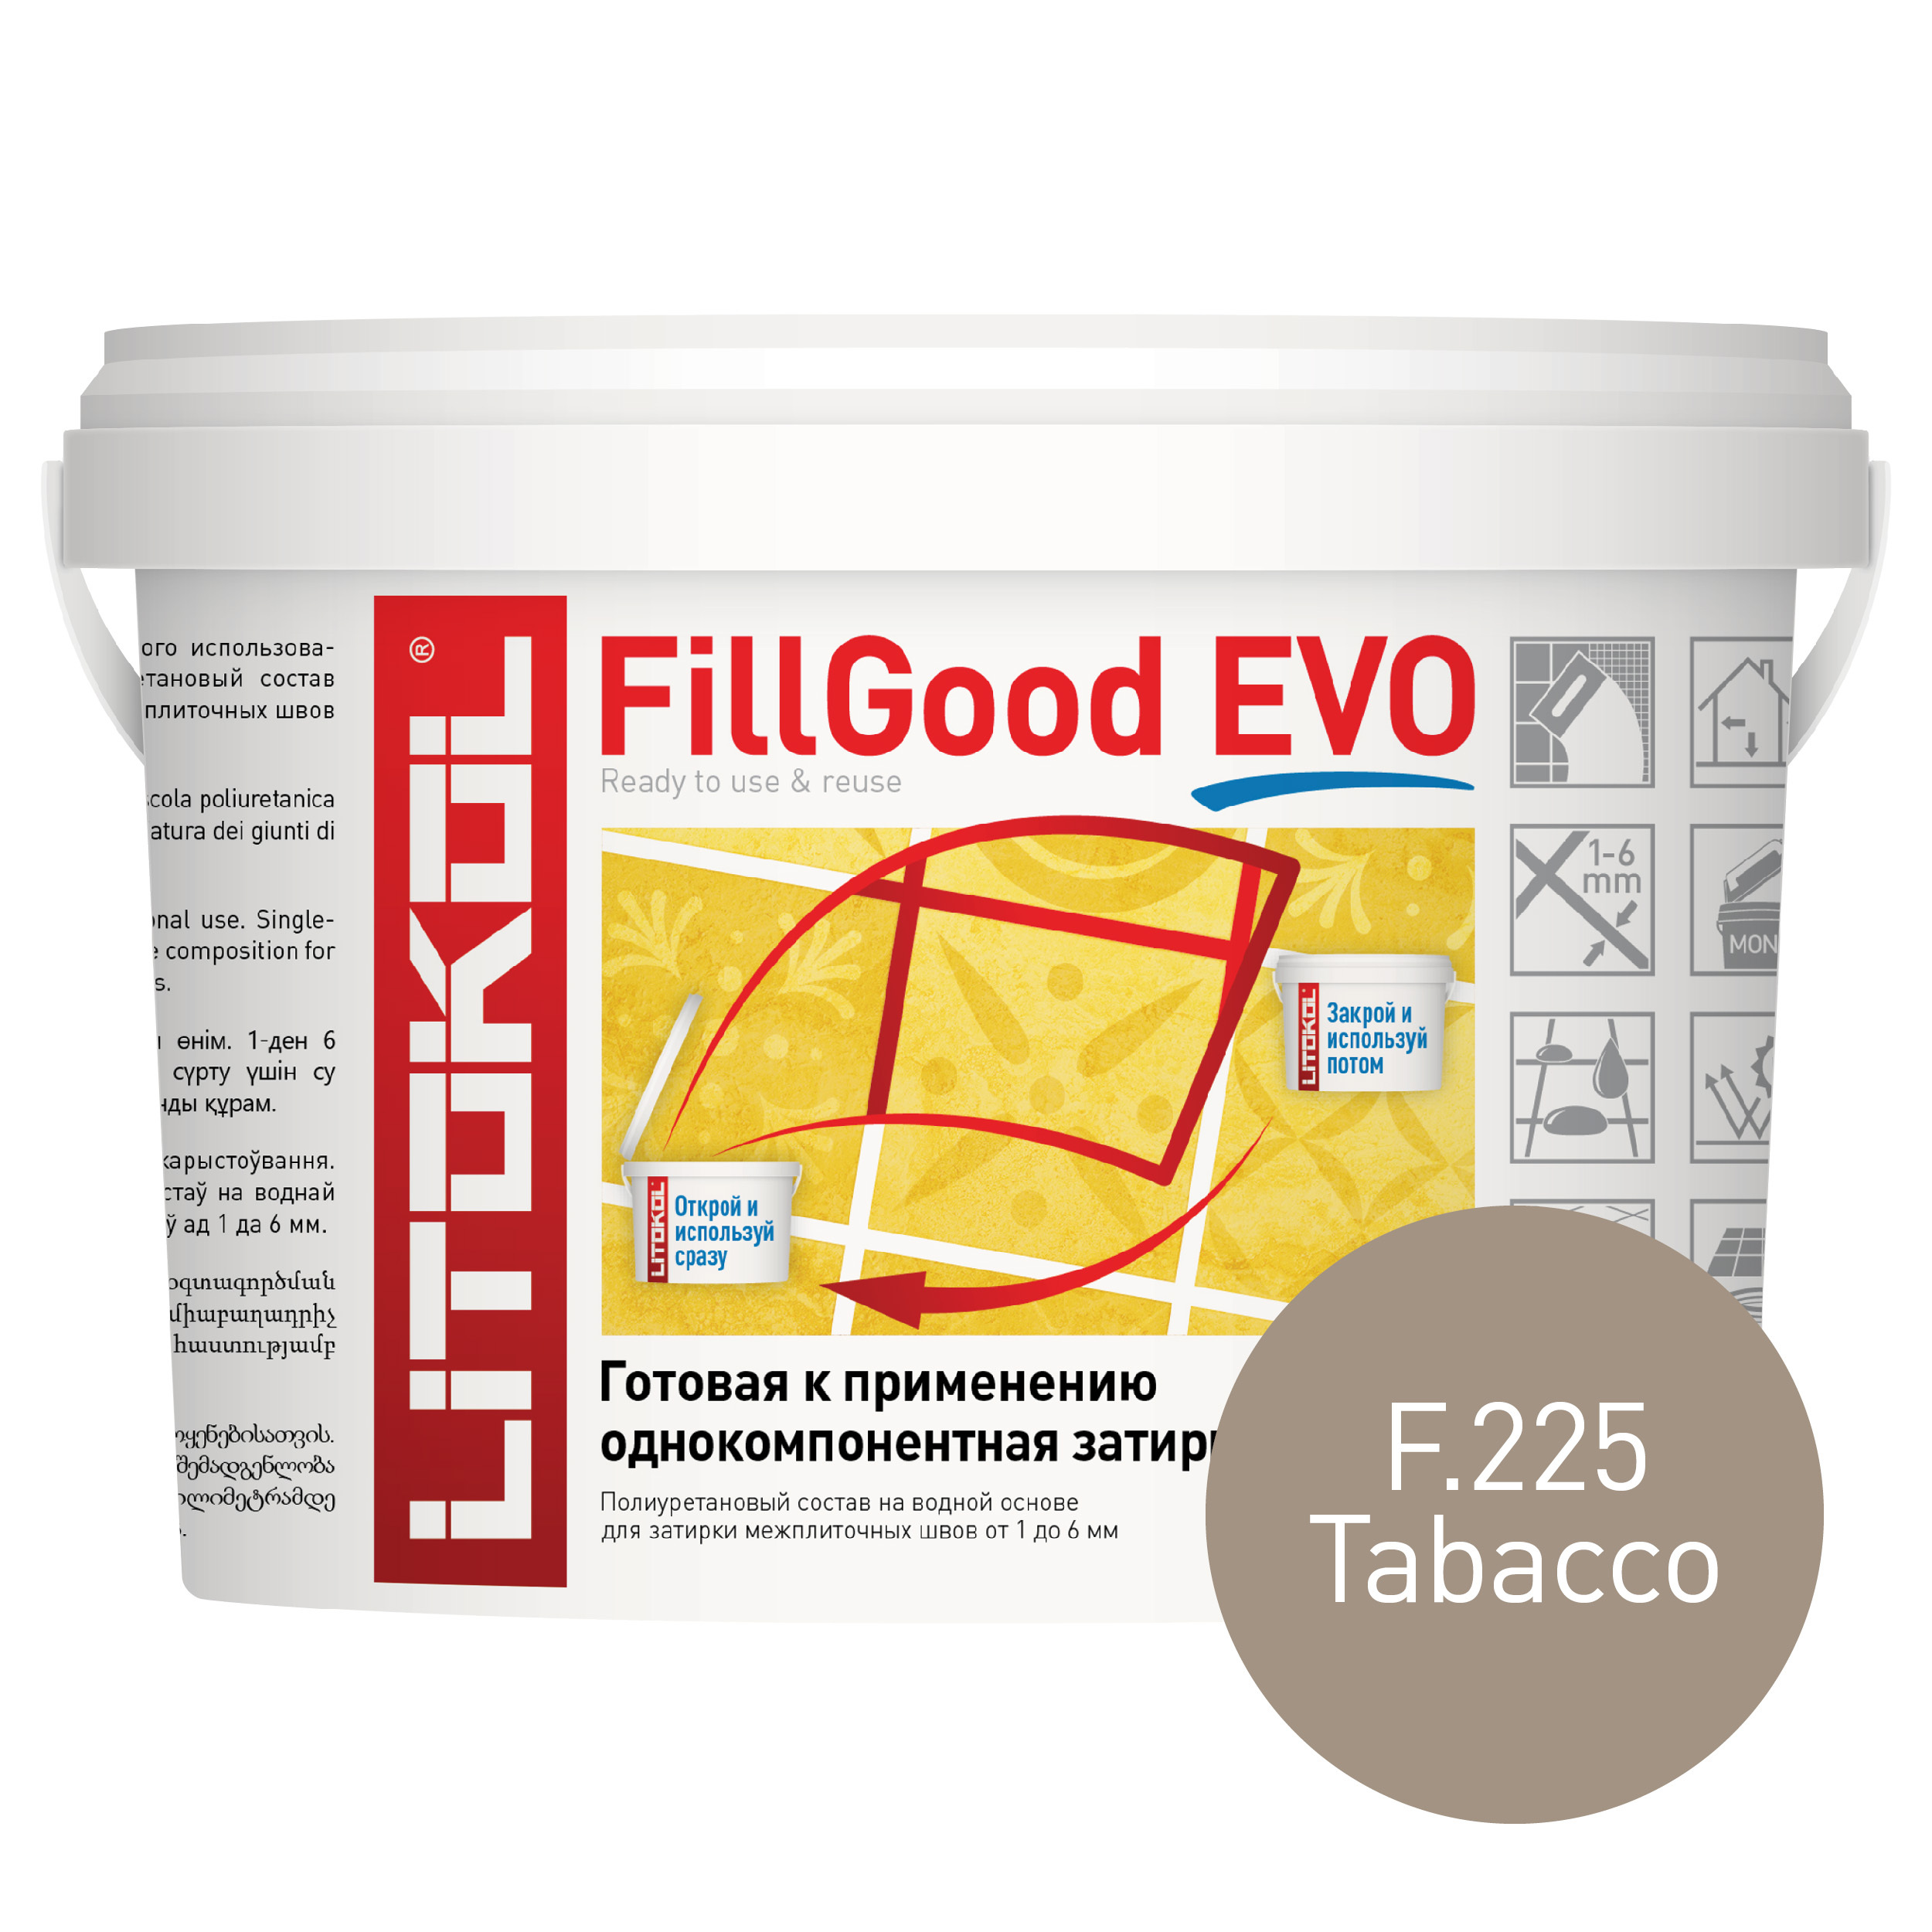 Затирка полиуретановая Litokol FillGood Evo F.225 табачная 2 кг